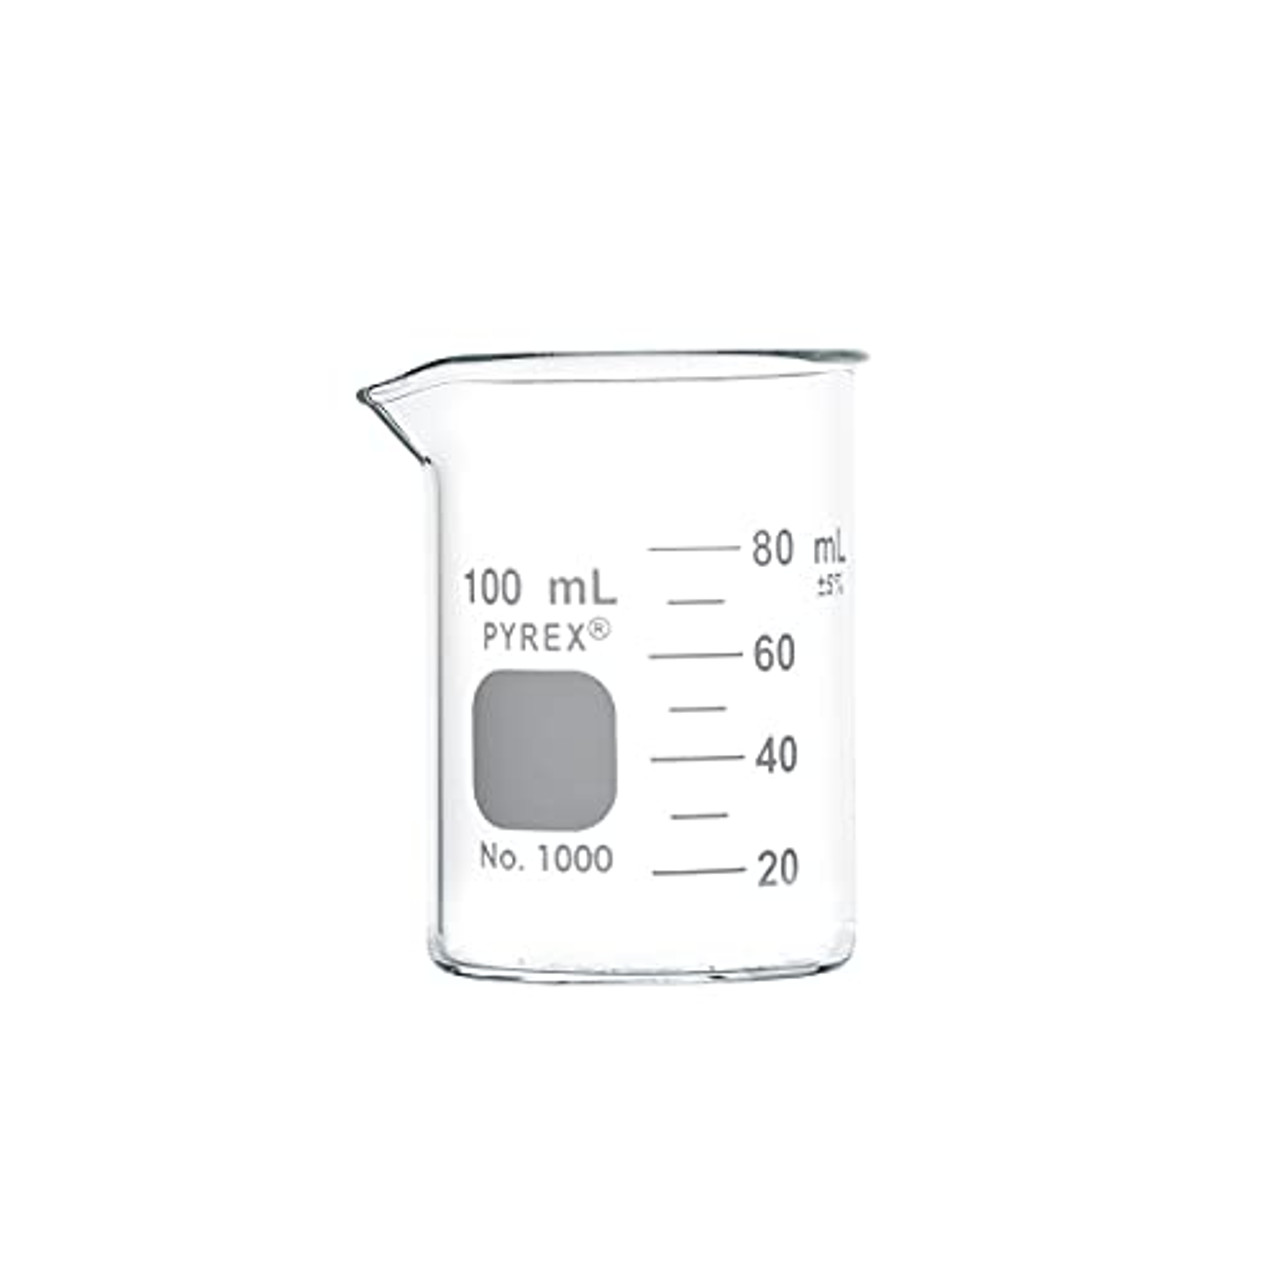 Buy High Quality Customize Laboratory Pyrex Borosilicate Glassware